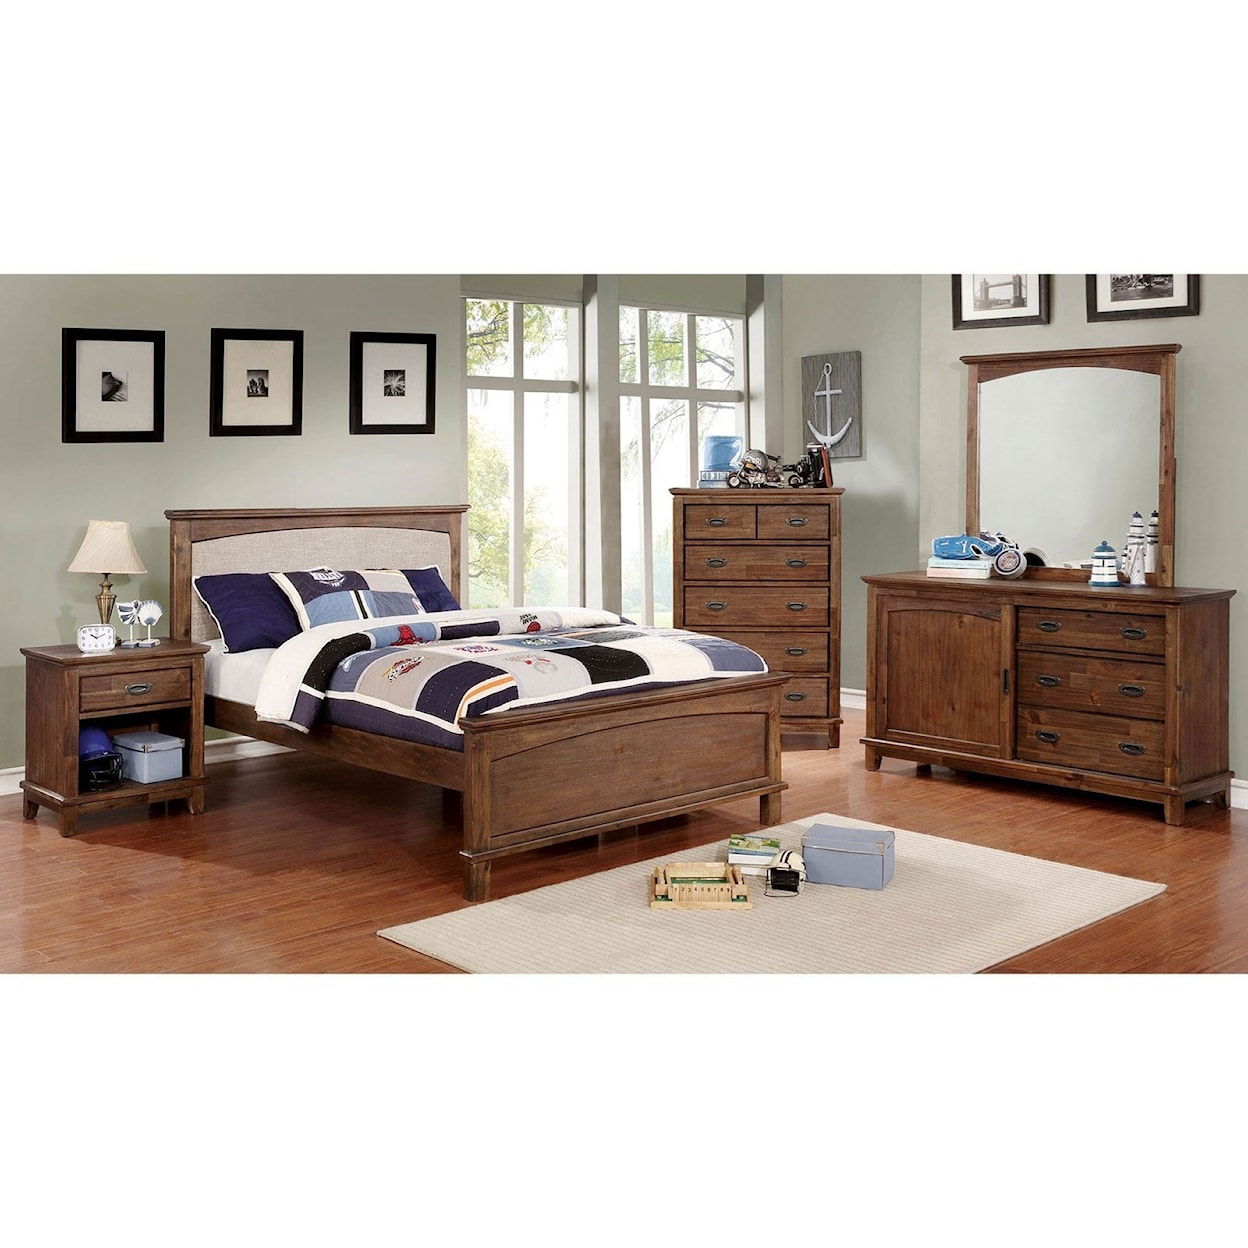 Furniture of America Colin Twin Bedroom Set